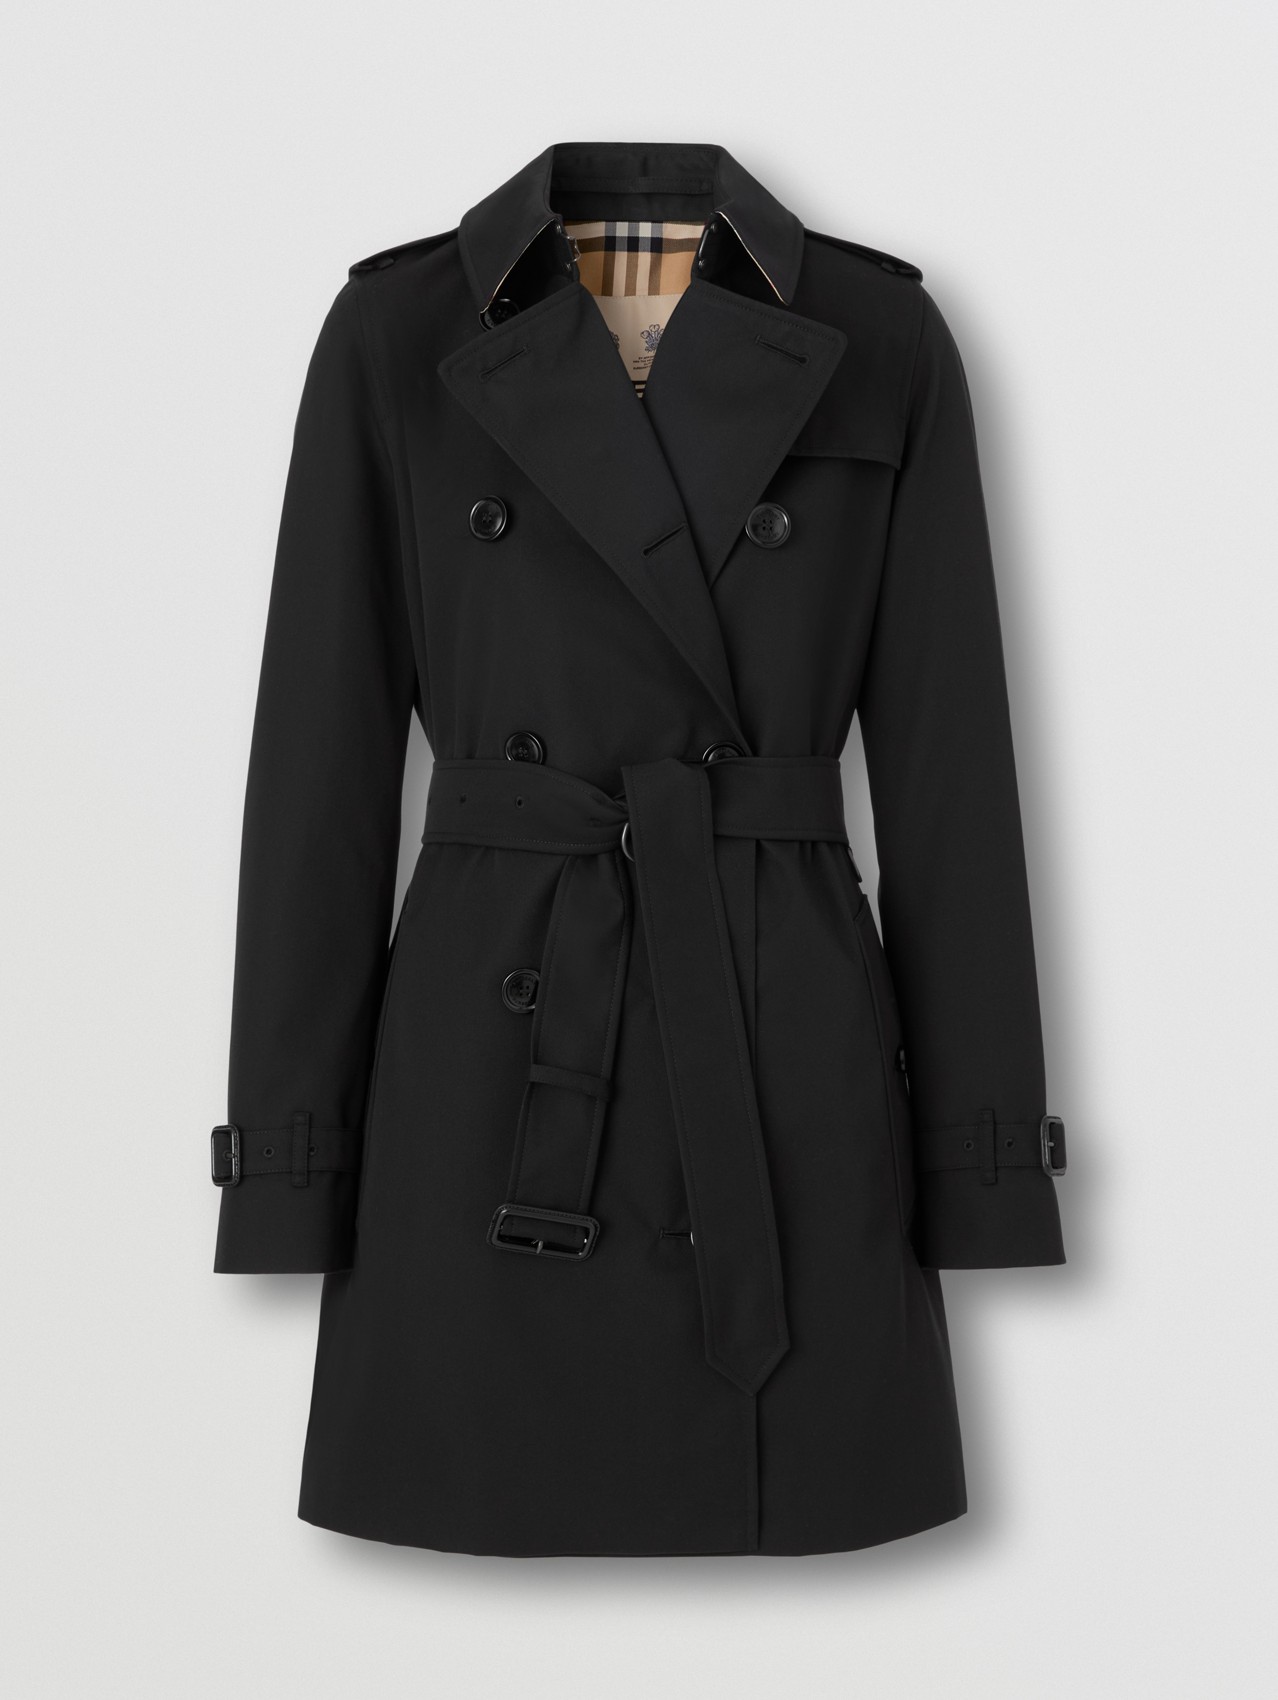 Stradivarius Long coat discount 75% Black/White XS WOMEN FASHION Coats Print 